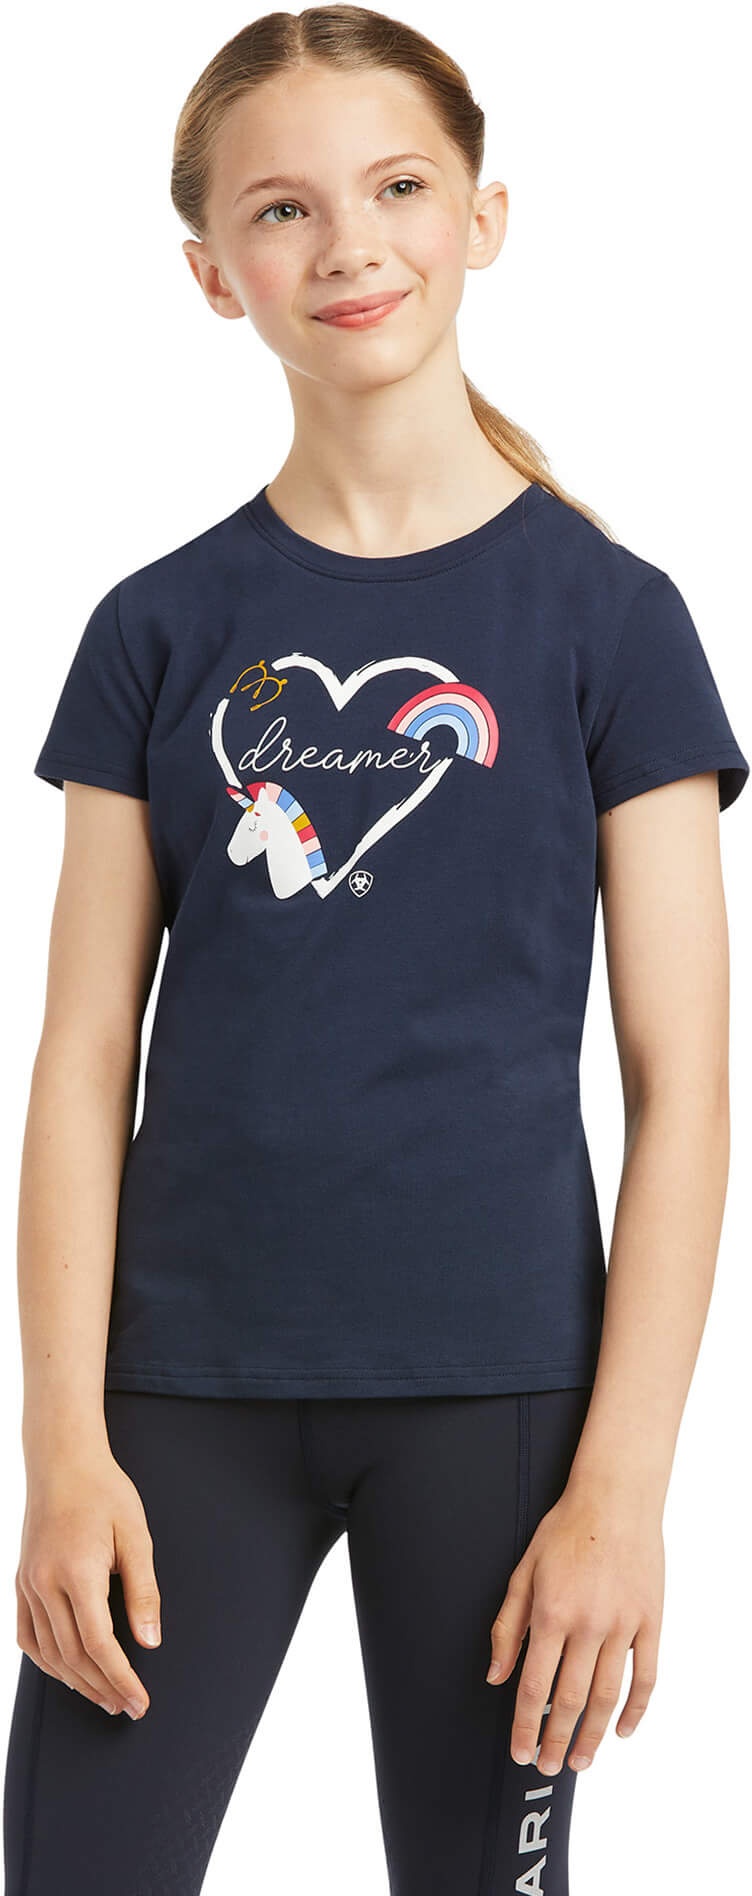 ARIAT Kinder T-Shirt SOMEDAY navy mit Pony Grafik, Größe: L